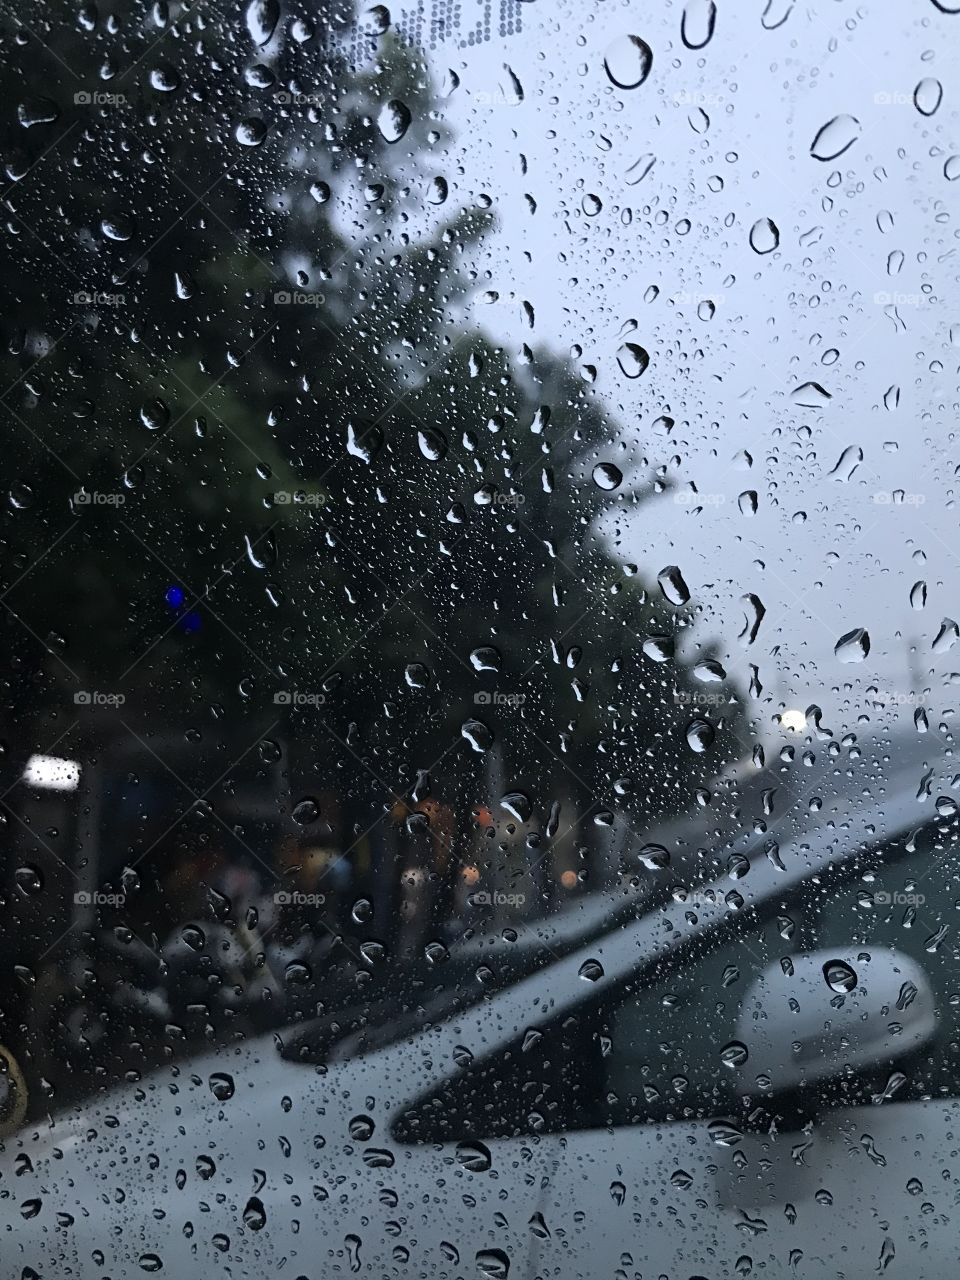 I’m in car when raining !!